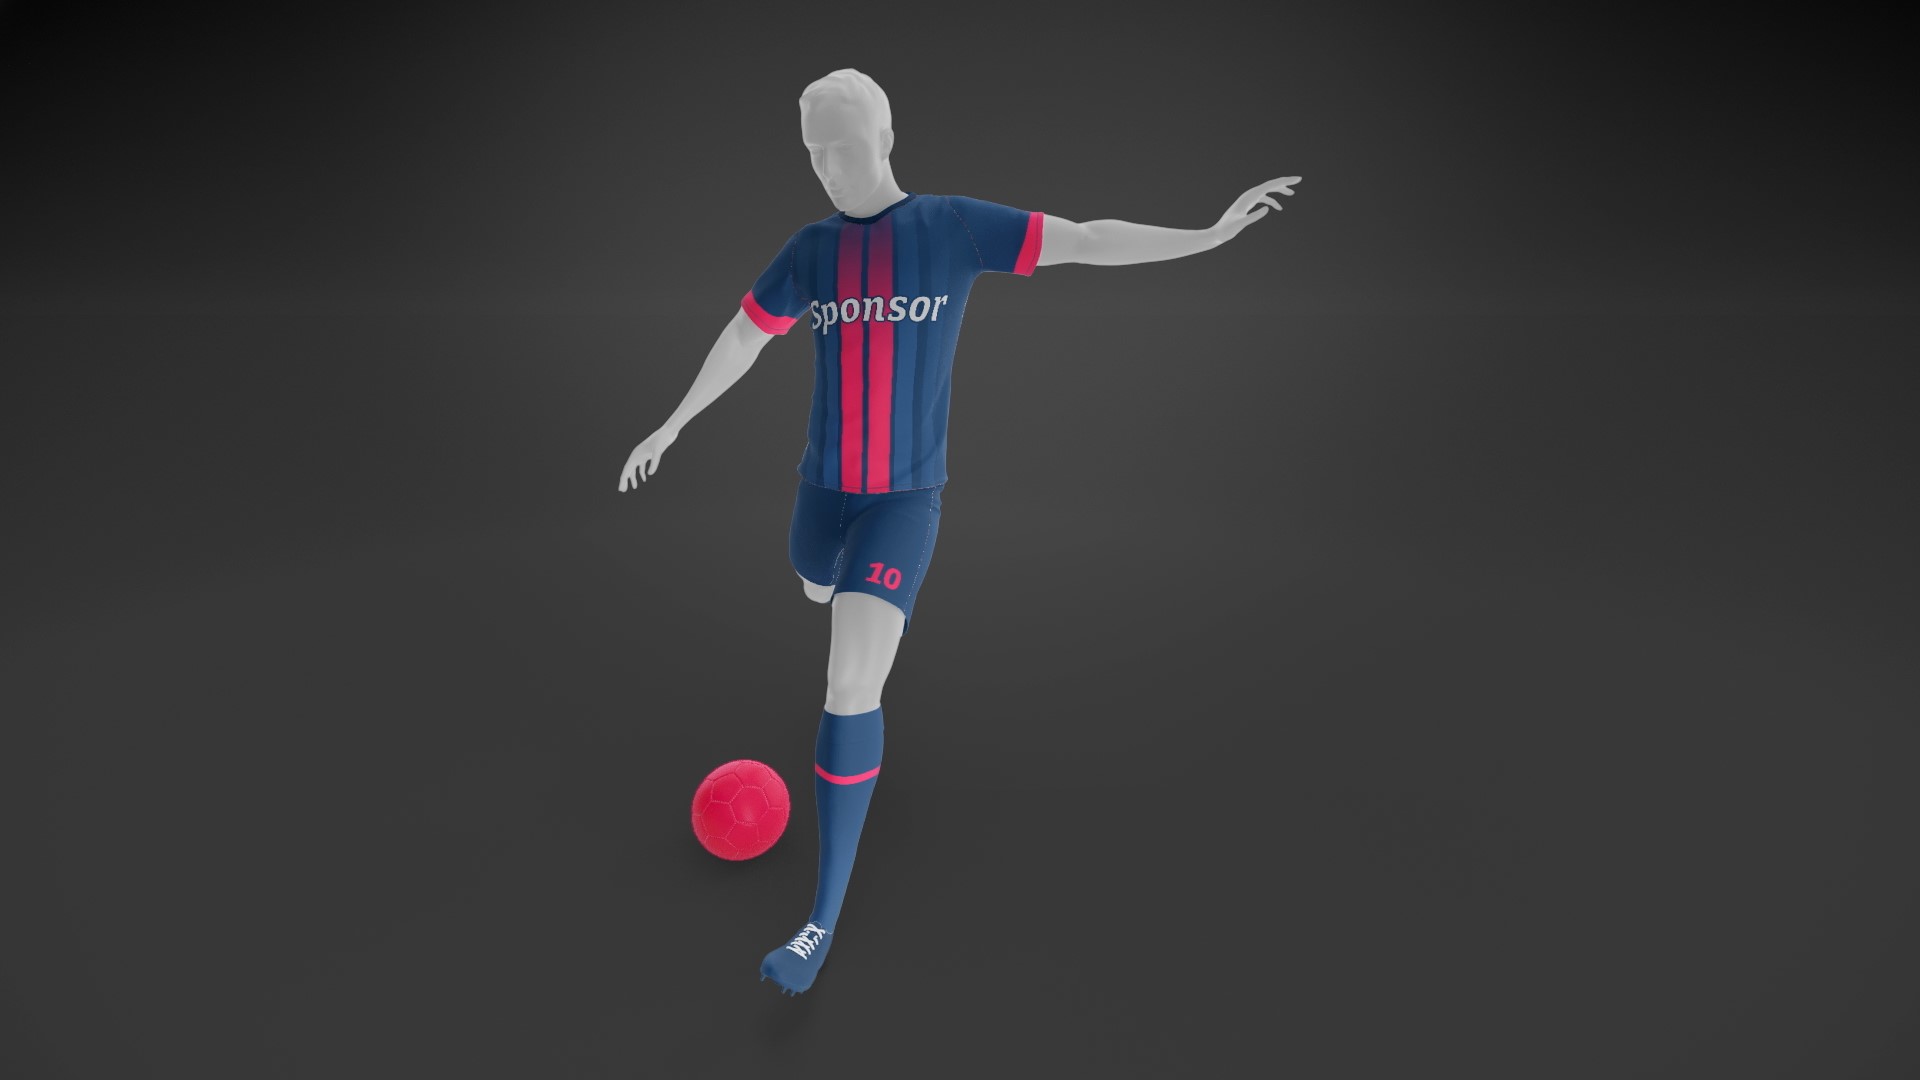 Soccer Uniform Mockup Template - Animated Mockup PRO